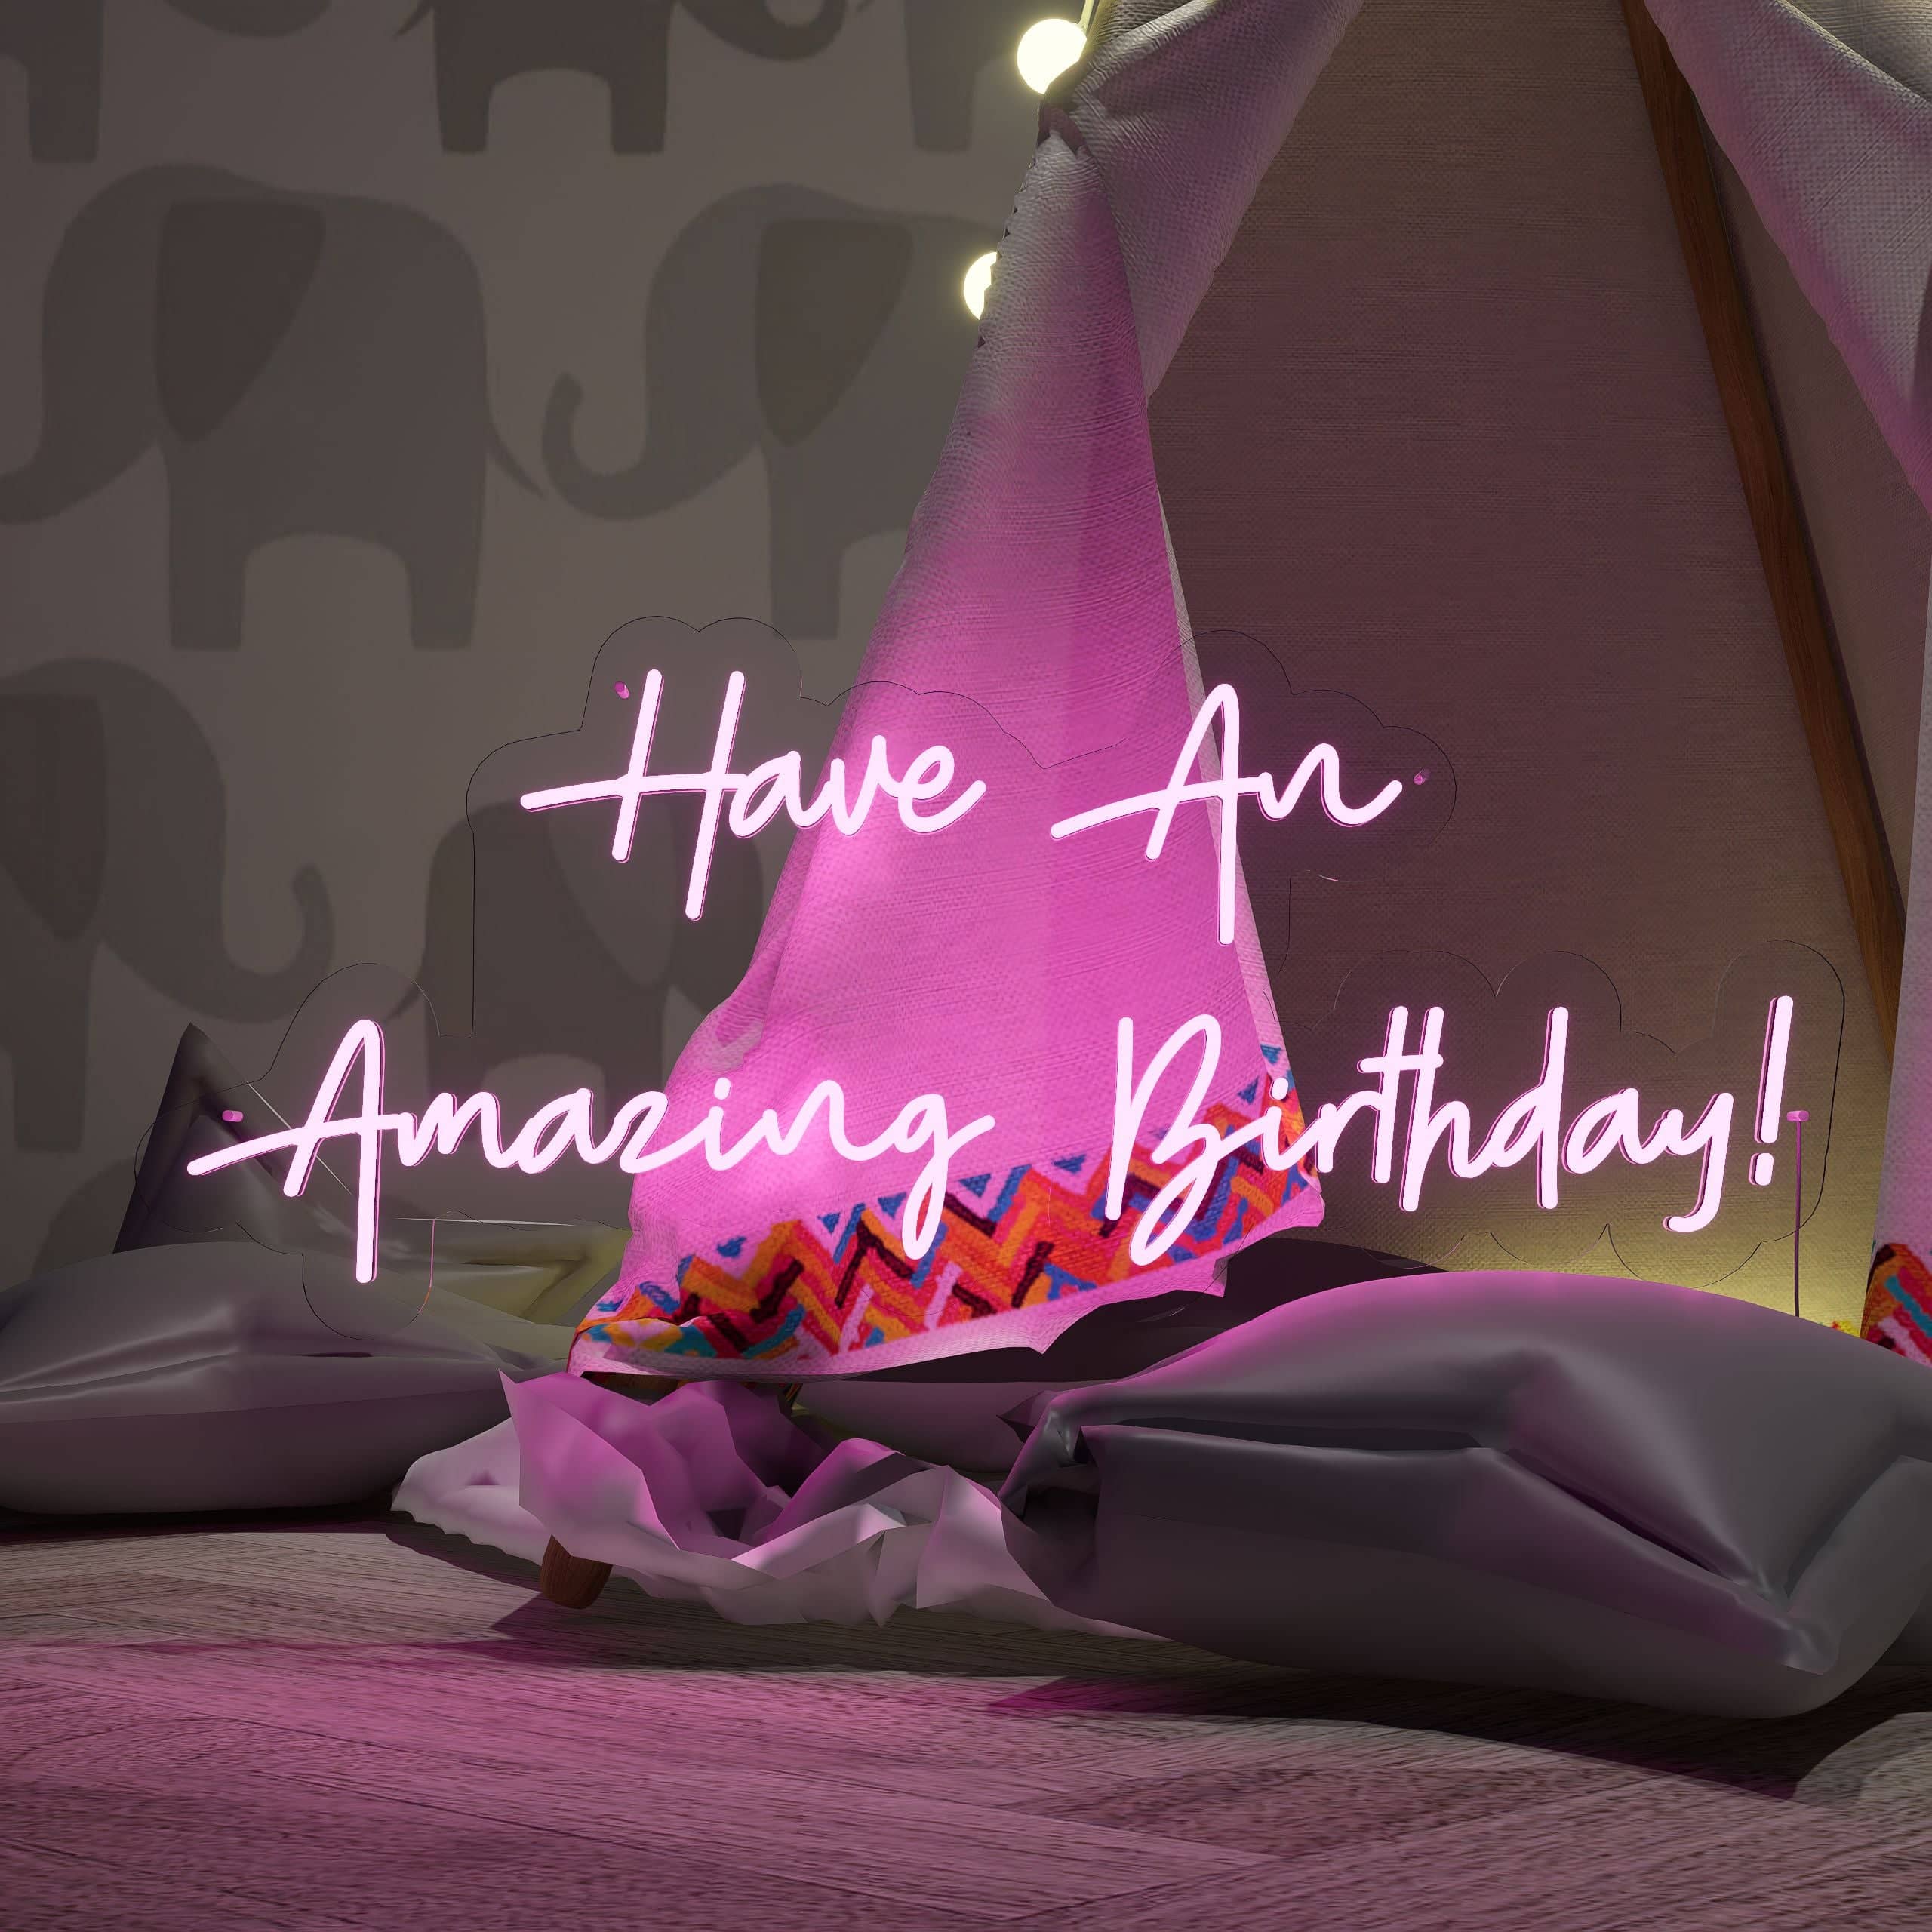 wishing-you-an-incredible-birthday!-neon-sign-lite